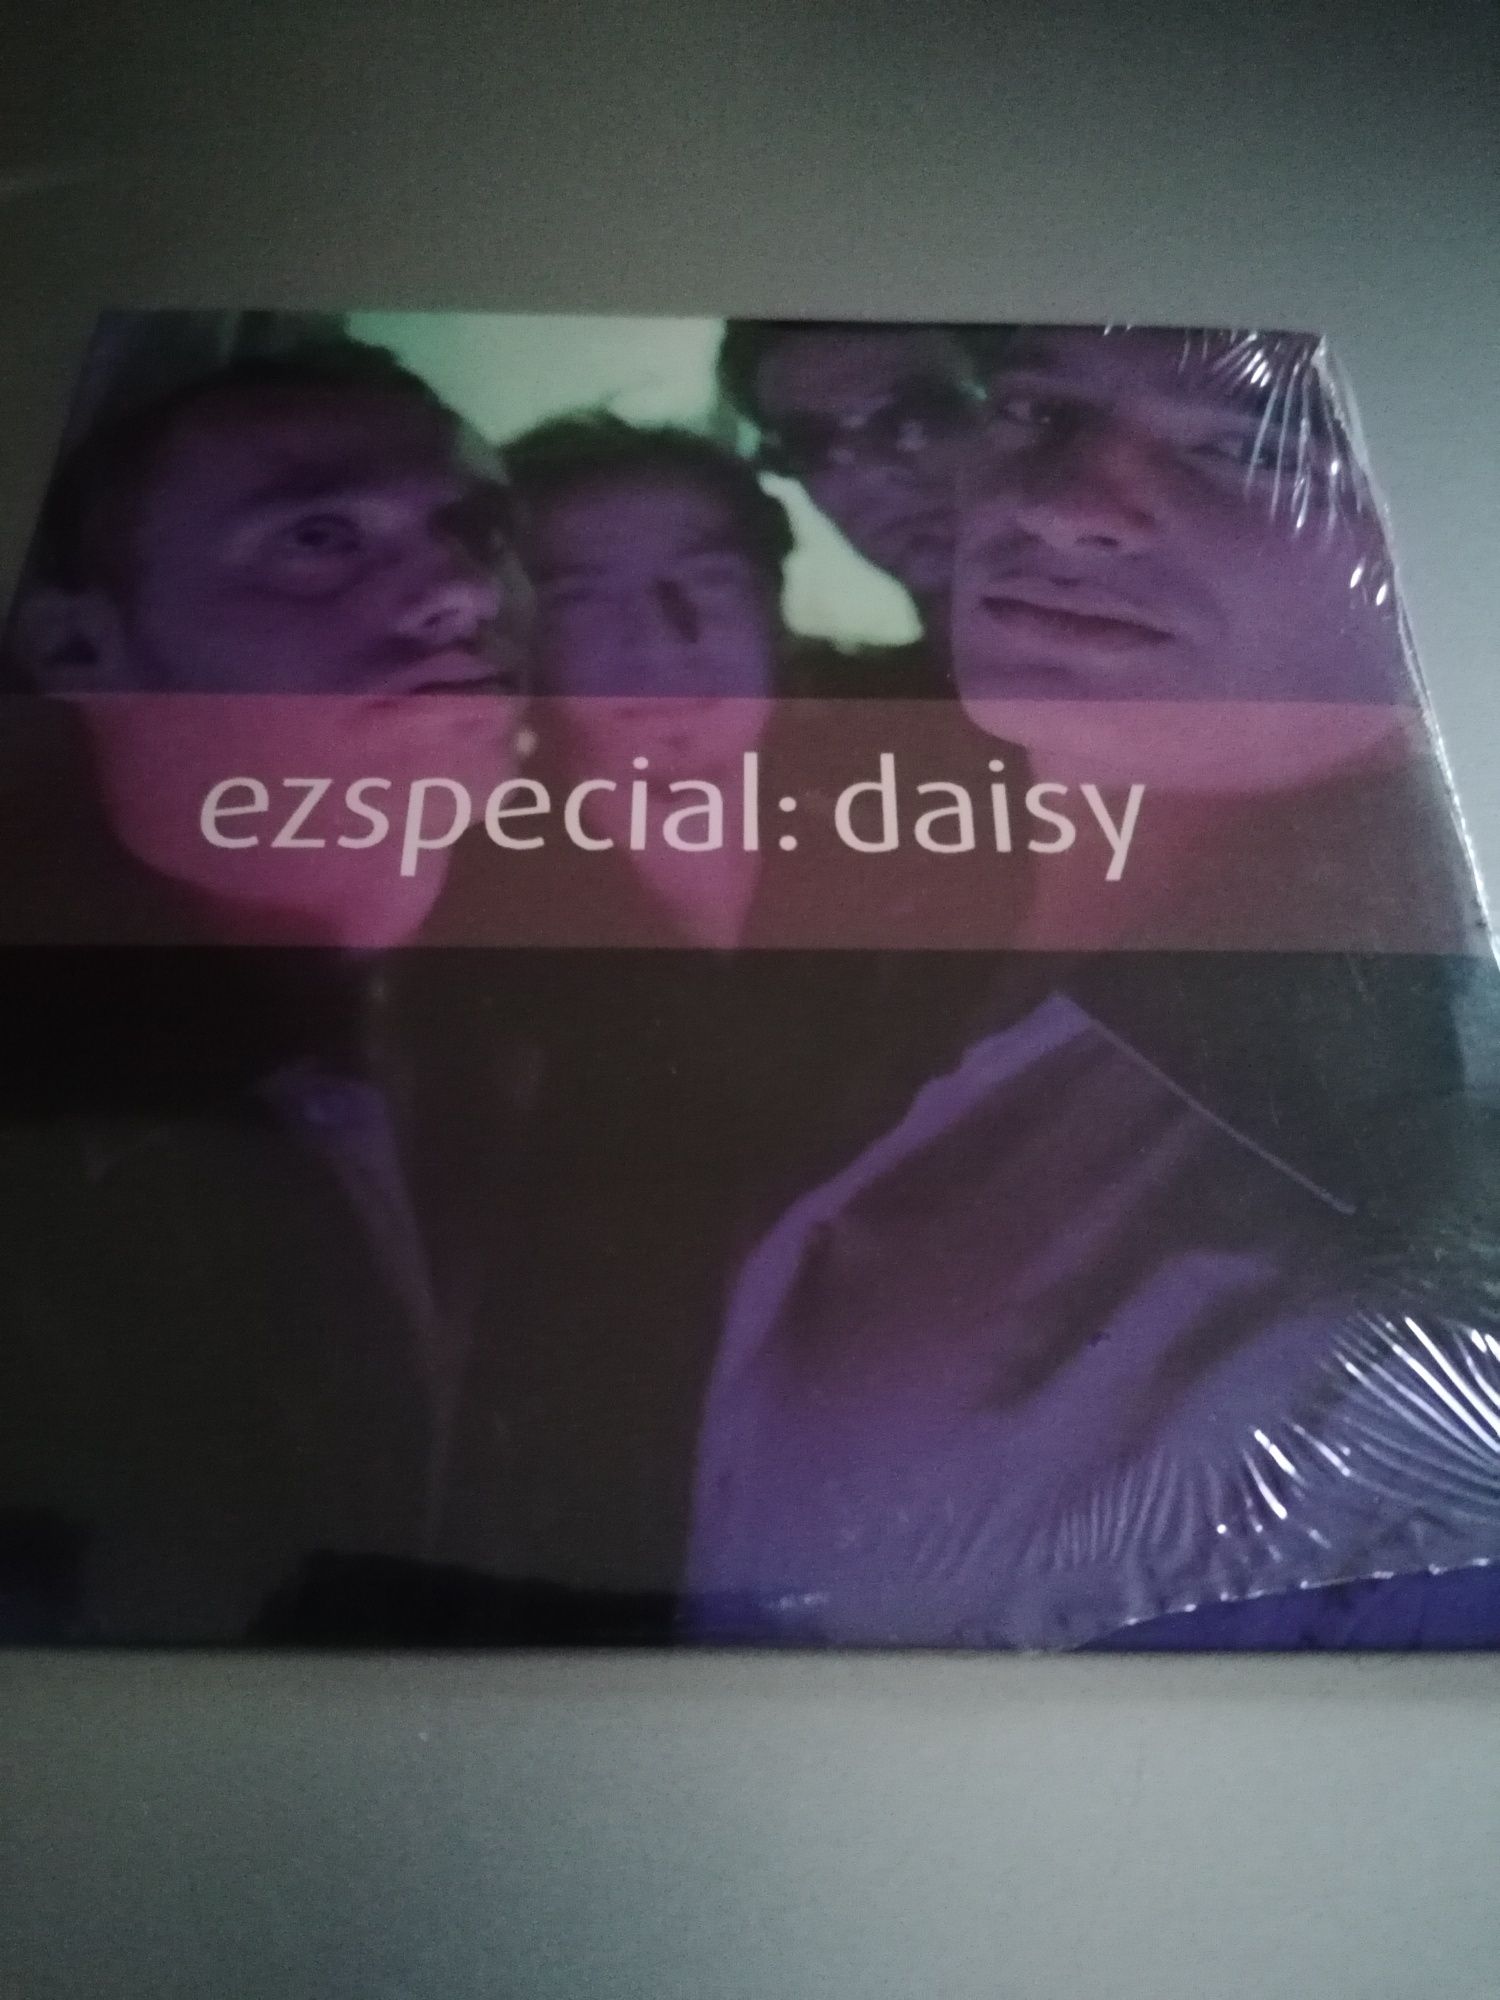 CD single dos ezspecial: daisy